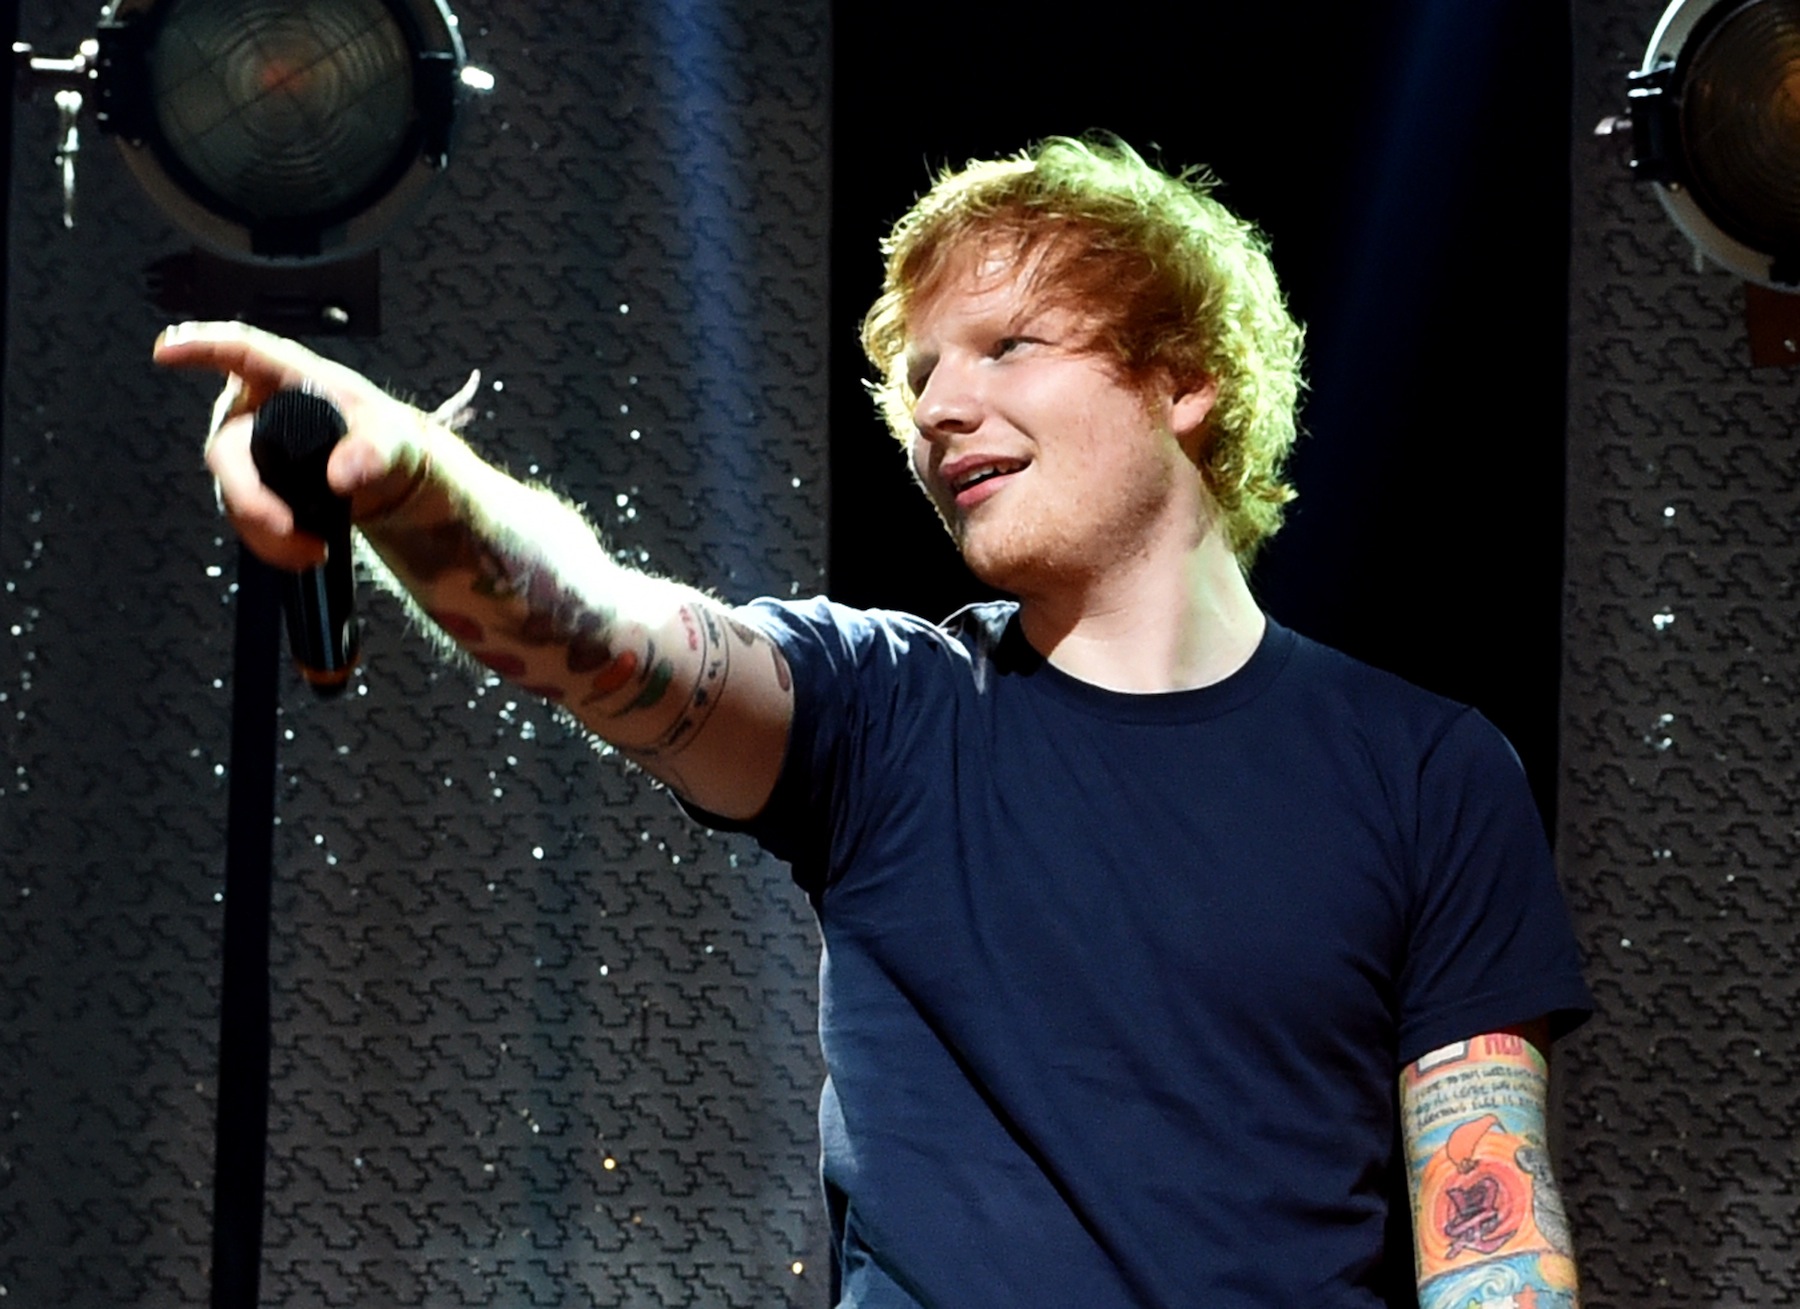 Ed Sheeran onstage on June 17, 2014 in Burbank, Calif. (Kevin Winter / Getty Images)